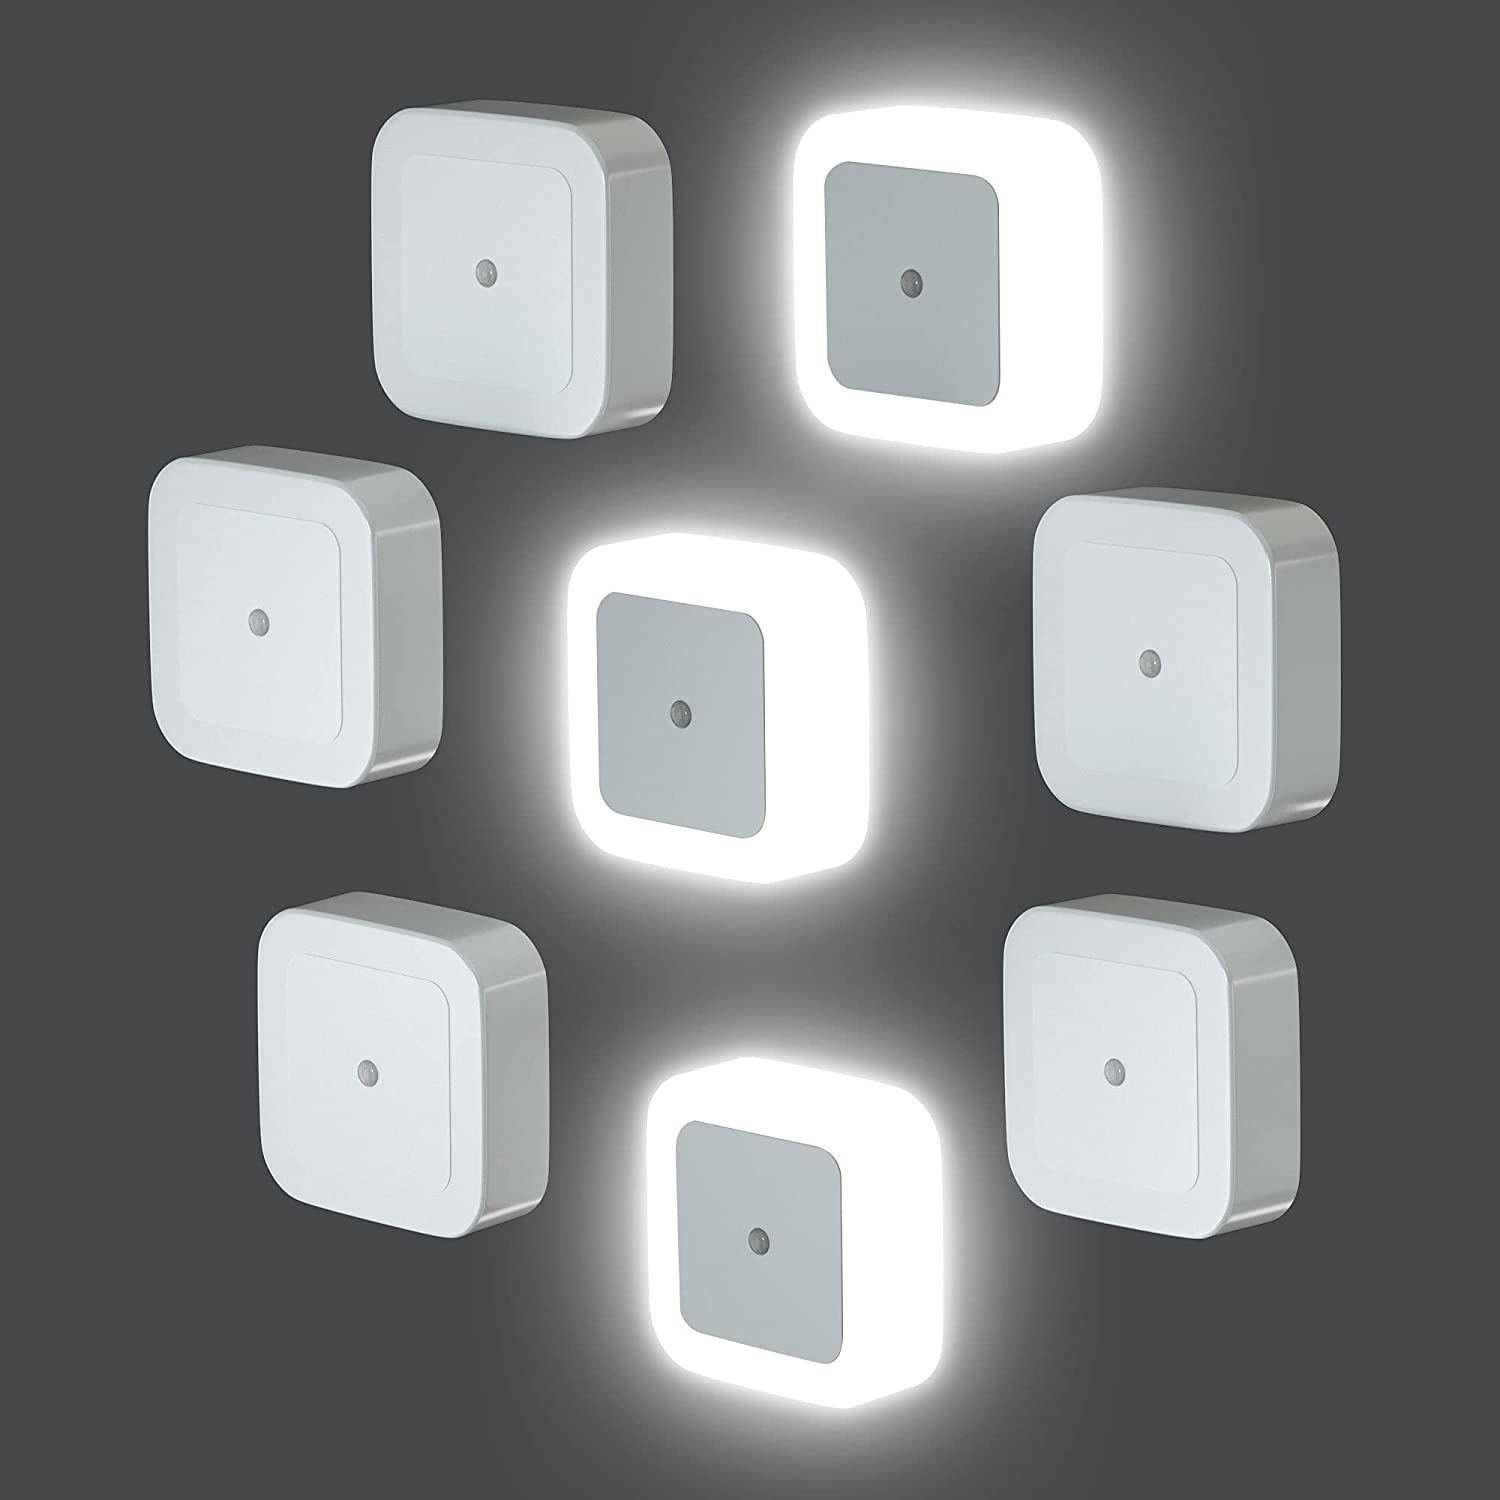 A set of flat square nightlights; three are turned on